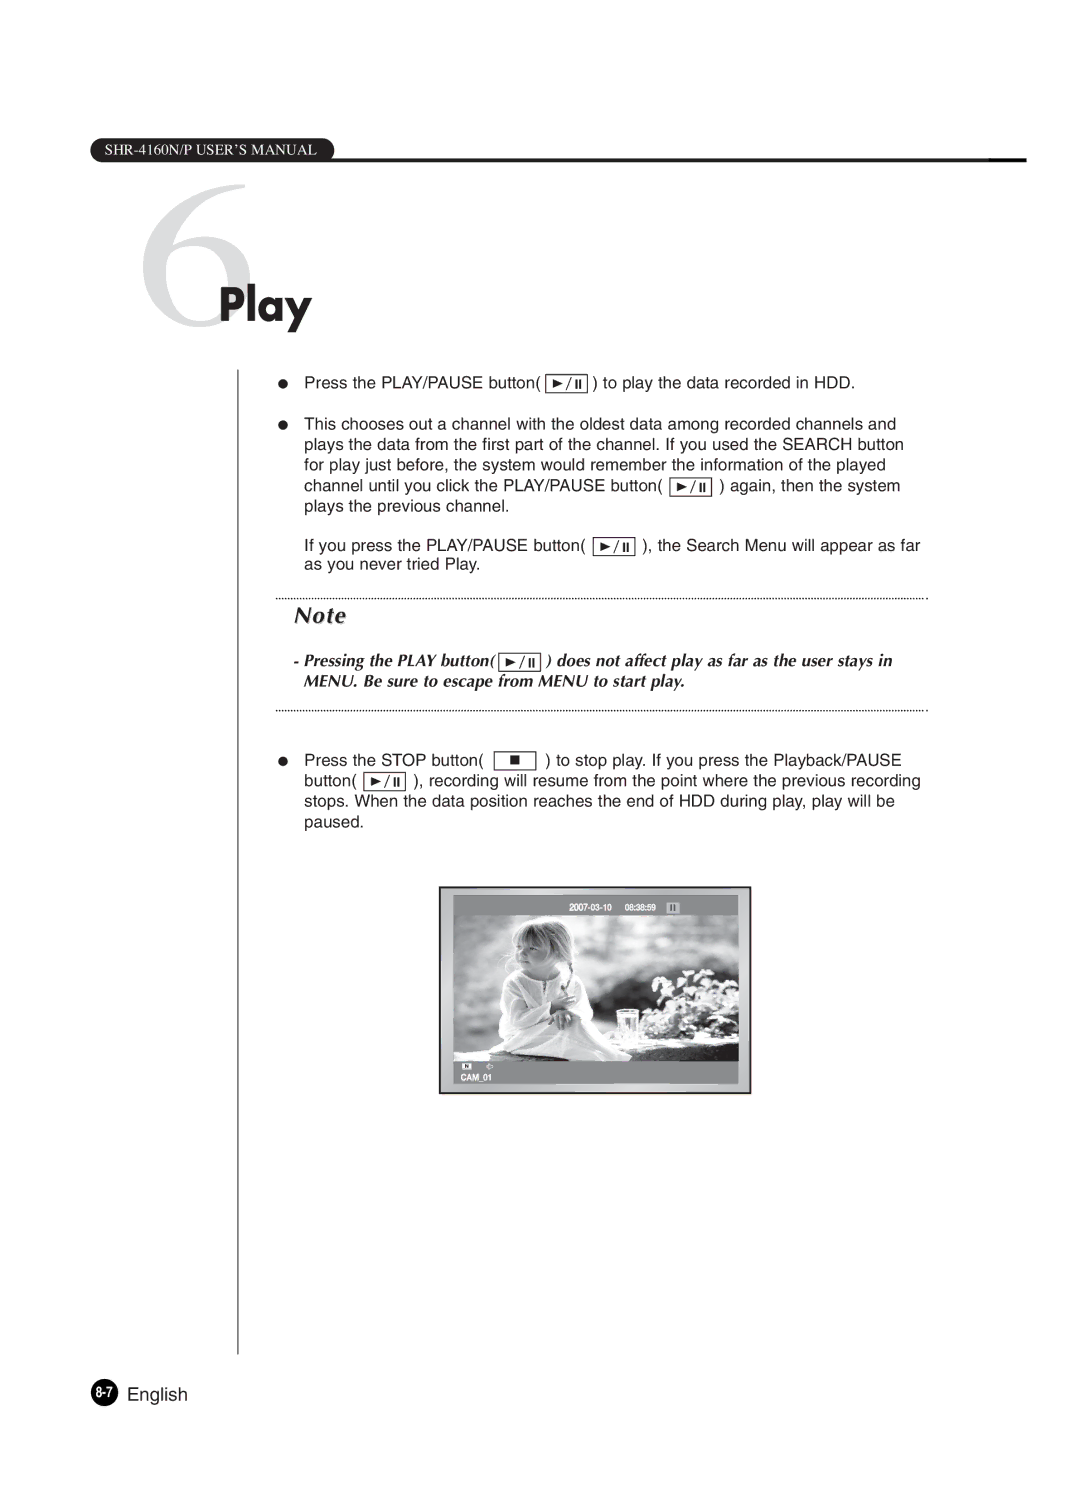 Samsung SHR-4160P manual 6Play, 7English 